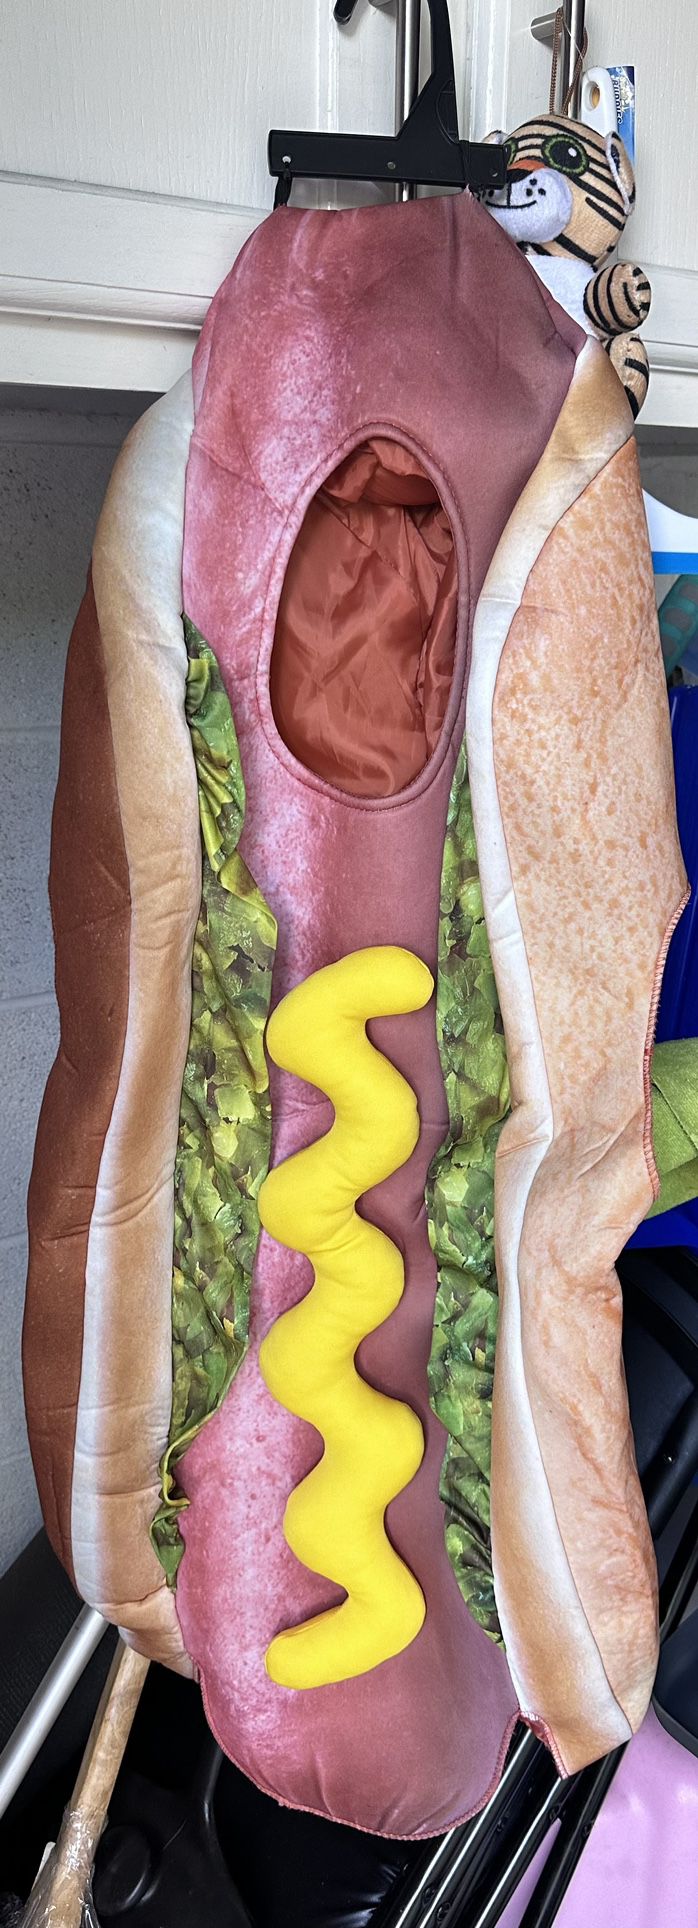 Costume Hot Dog